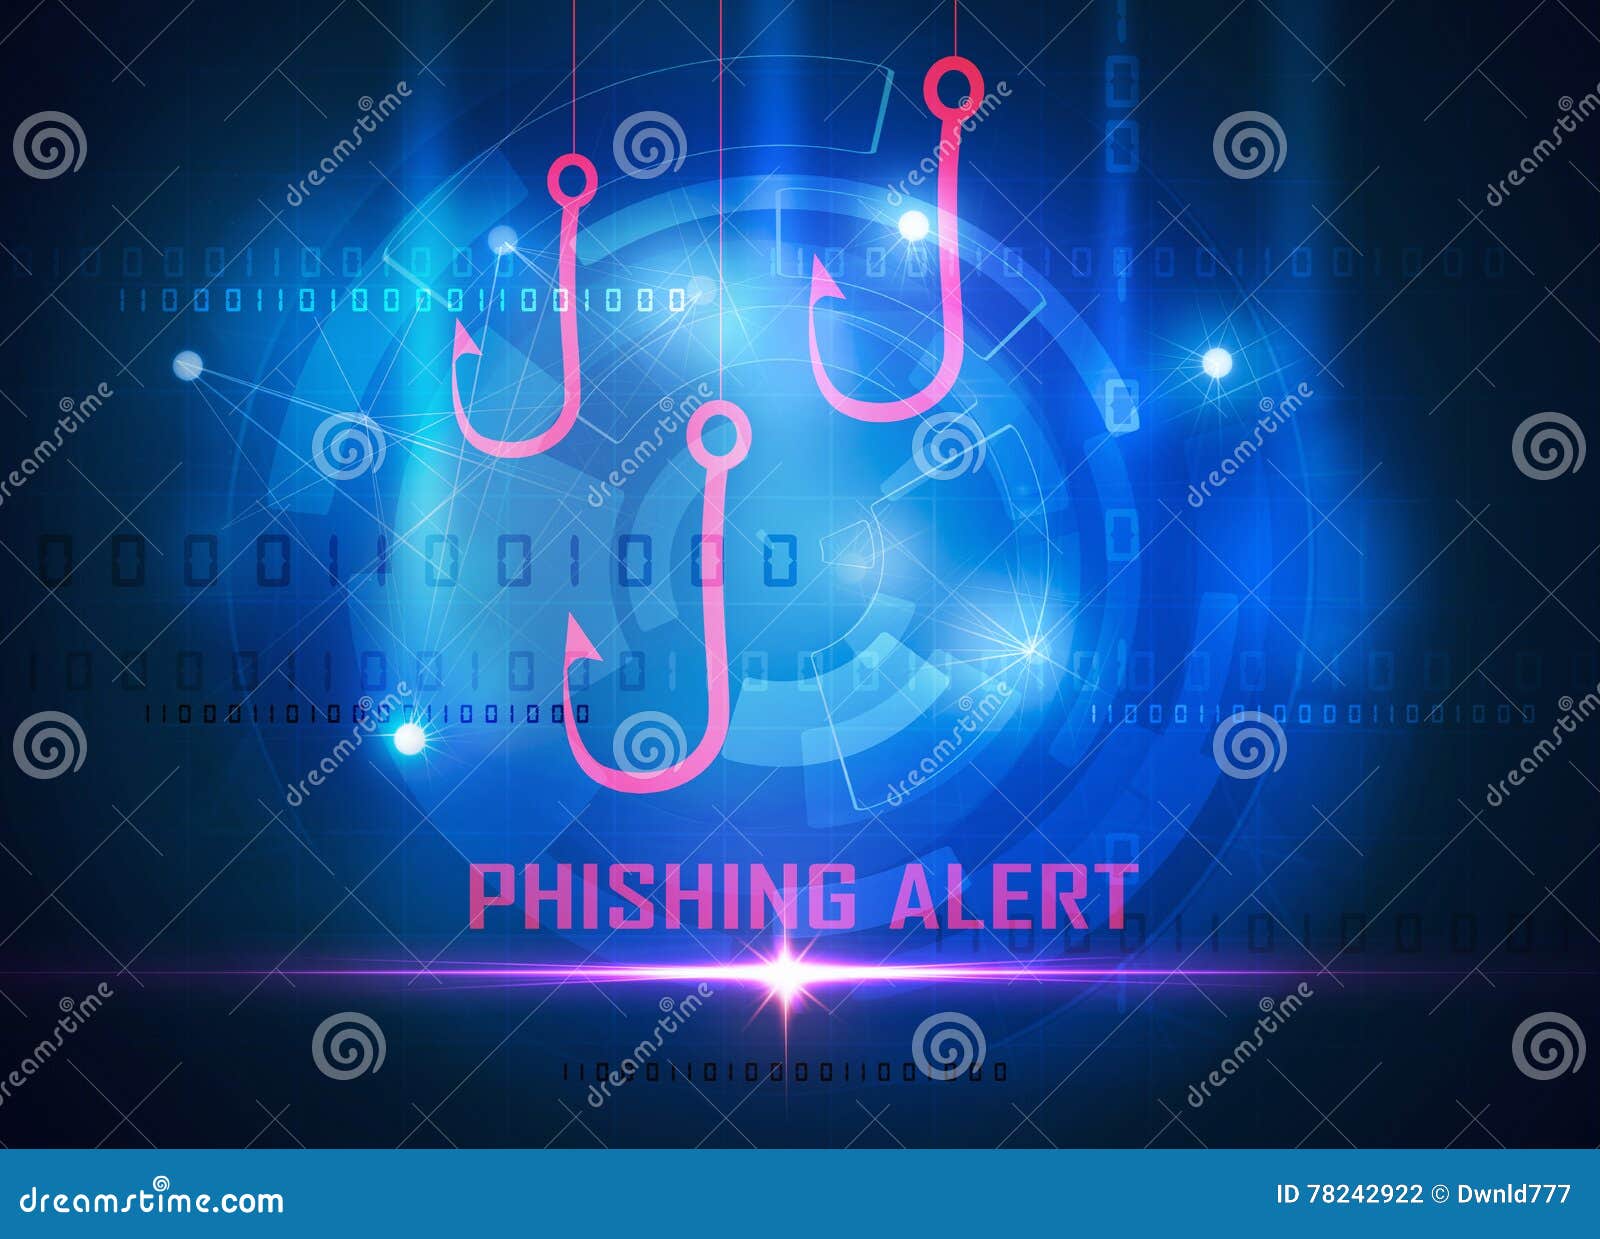 phishing computer data steal